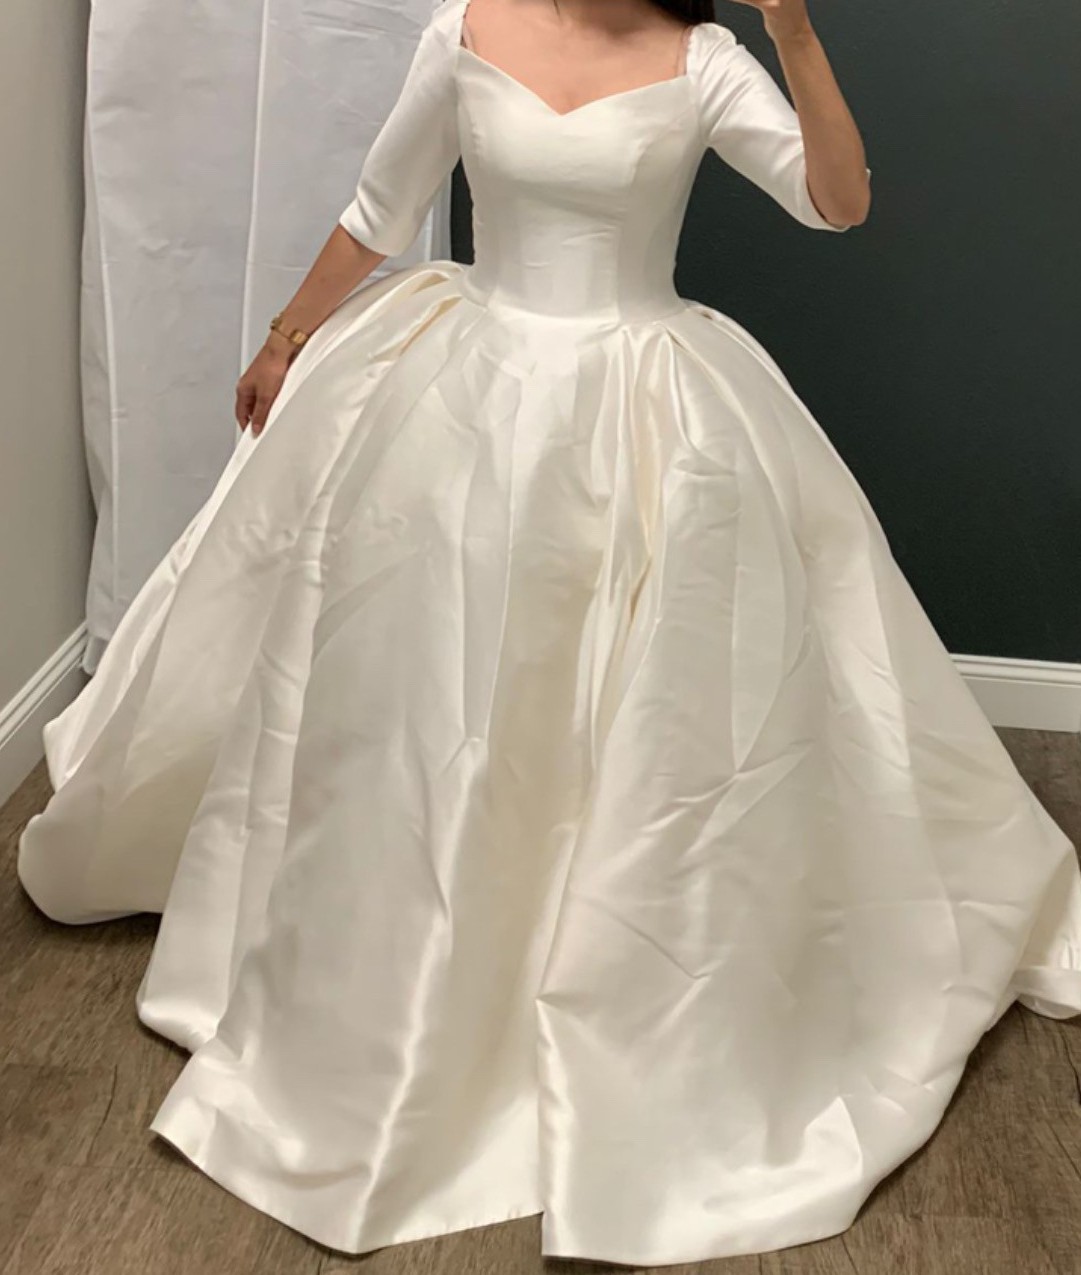 macy dresses for weddings